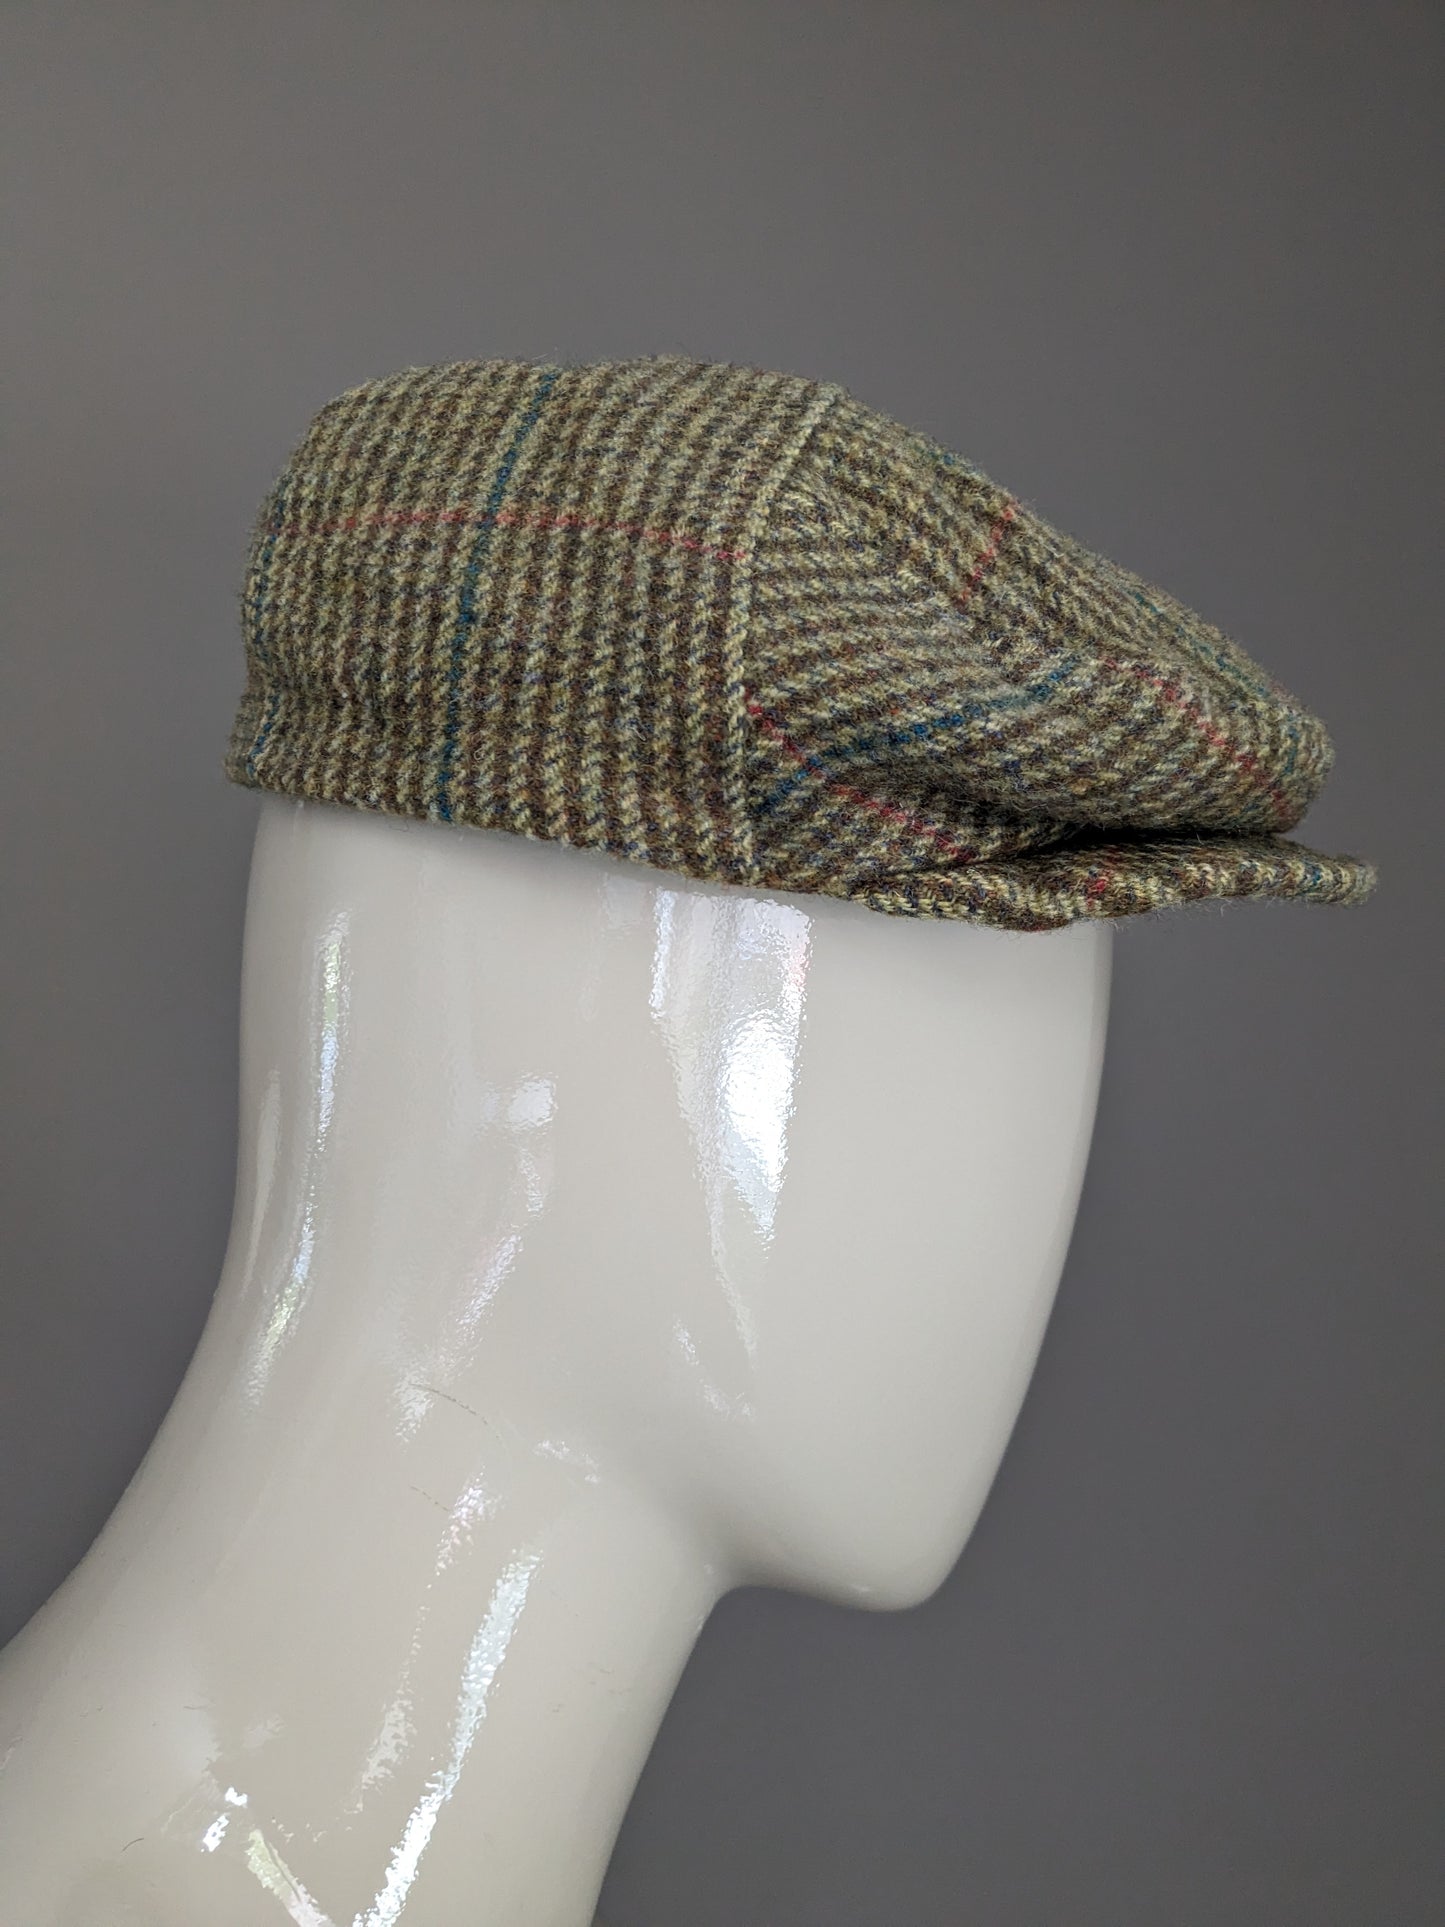 Vintage John Hanly & Co Woolen Flat Cap / Cap. Braunes grünblaues rot geprüft. 56 cm Umfang.